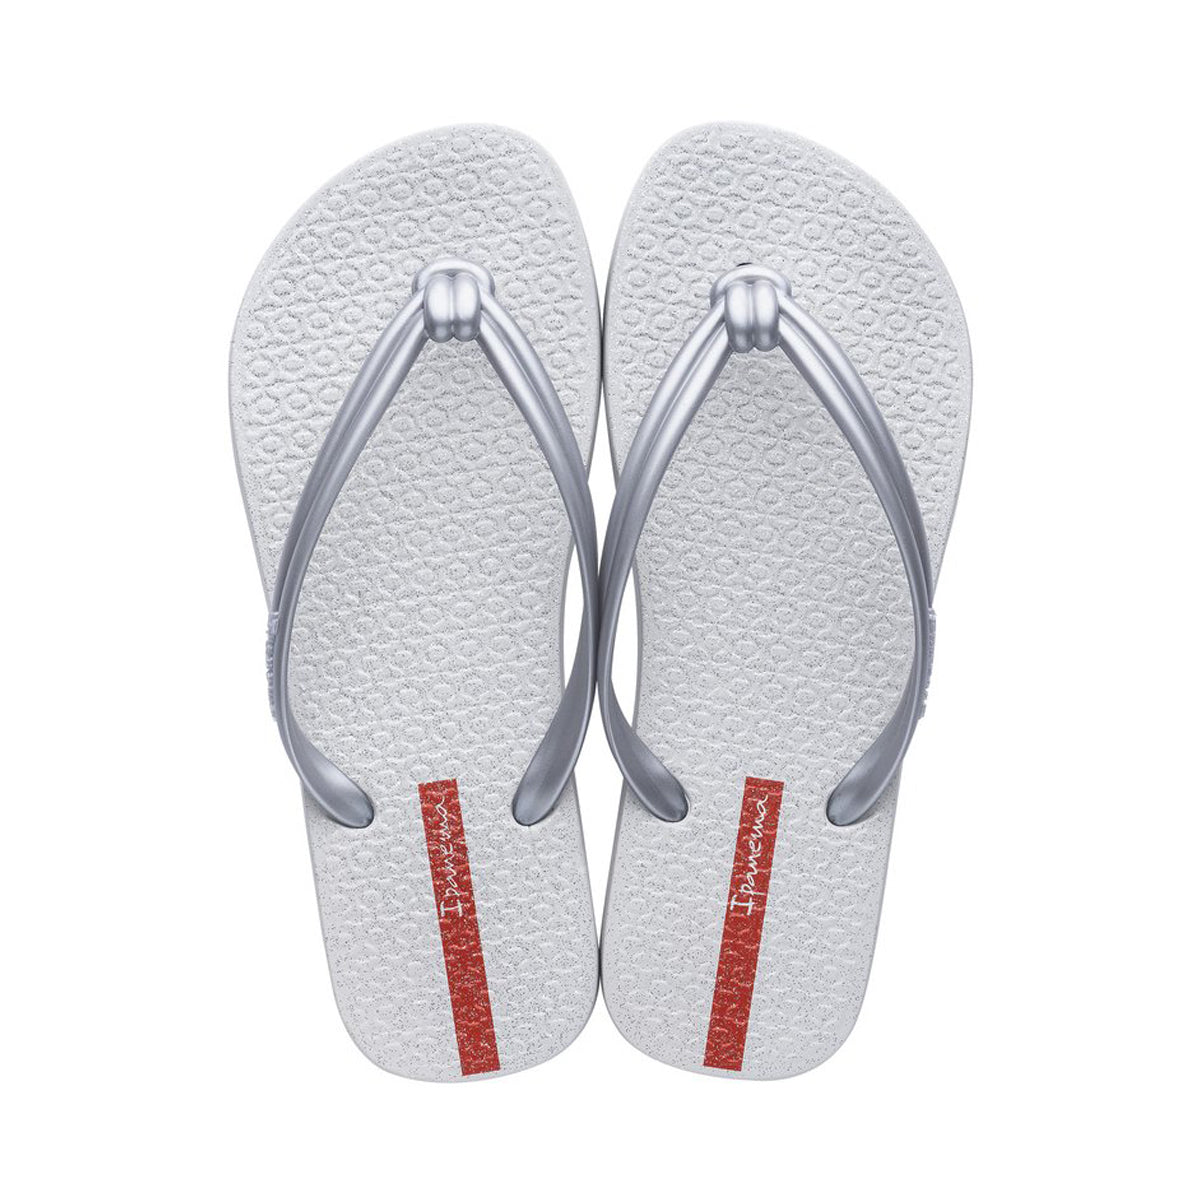 Ipanema Flip-Flops For Women, Grey & Silver